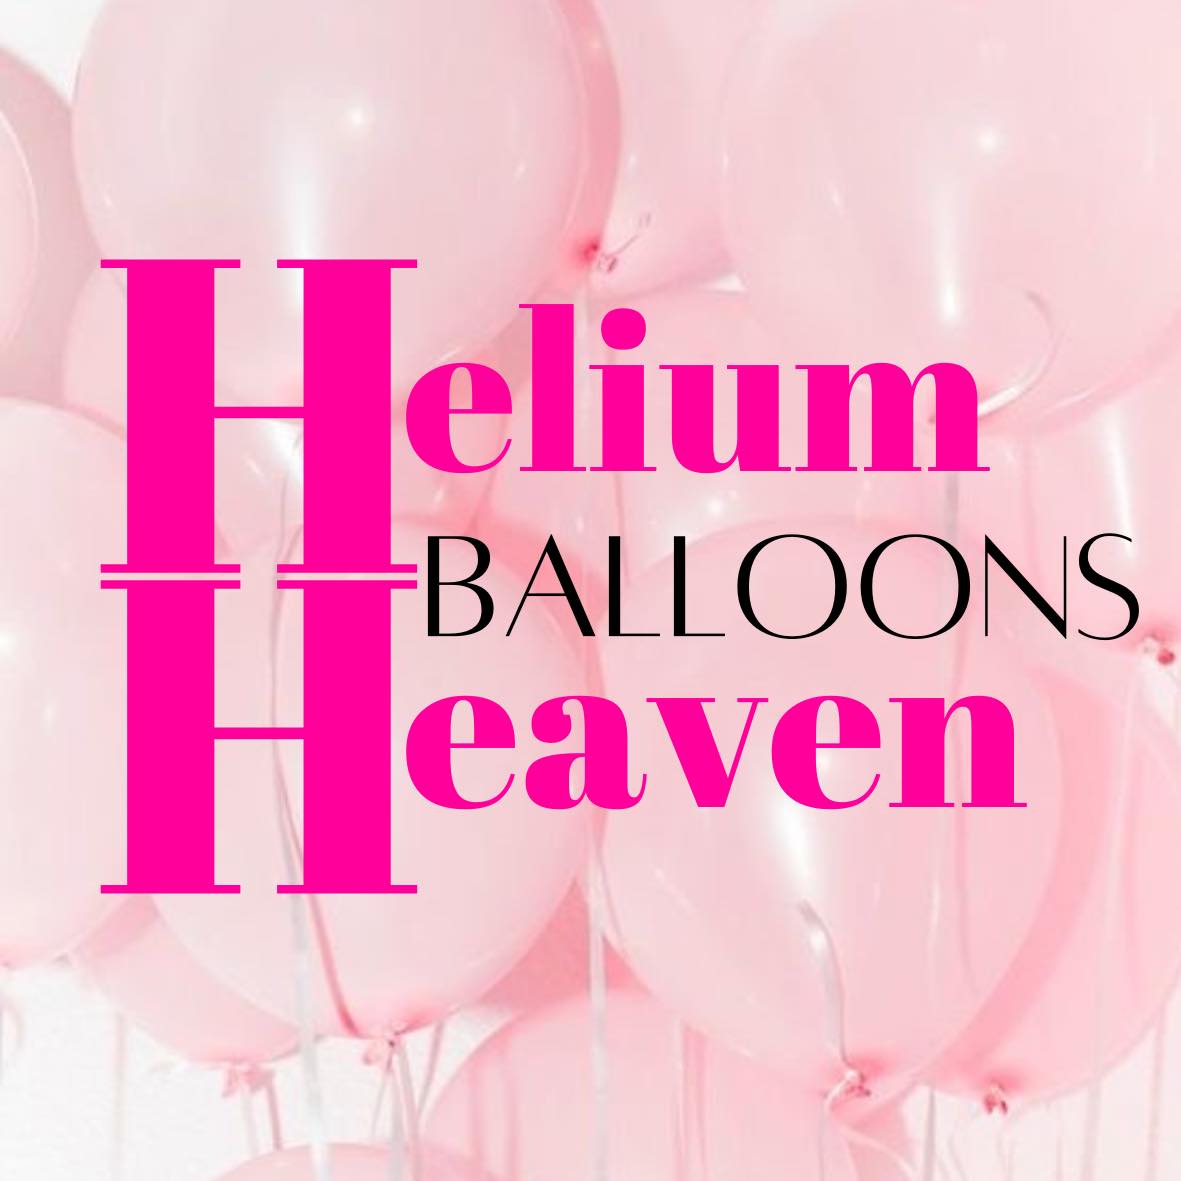 Heaven Helium Balloons